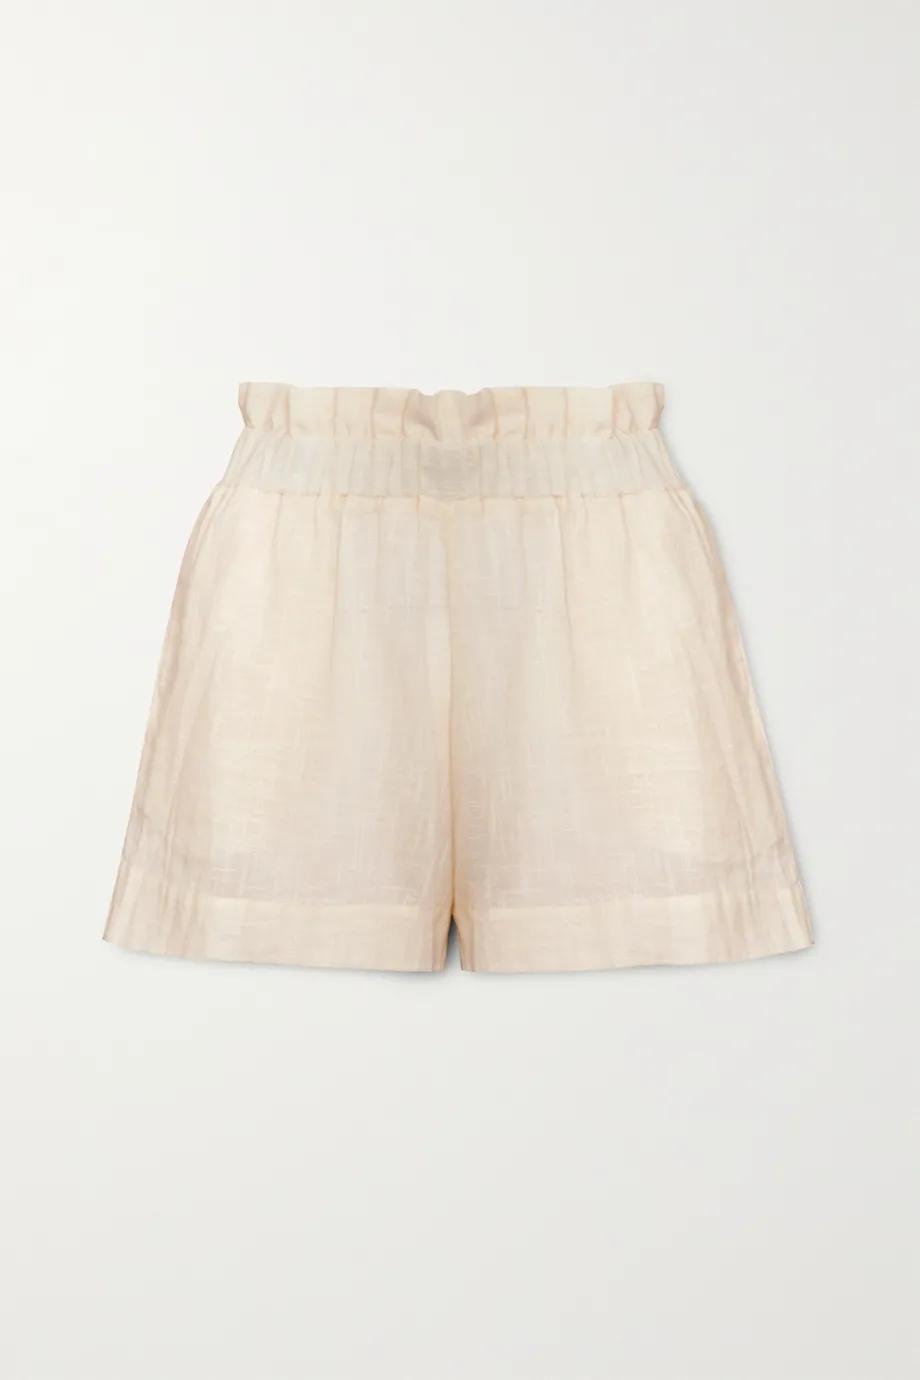 + NET SUSTAIN Jamie organic cotton-gauze shorts by CLOE CASSANDRO